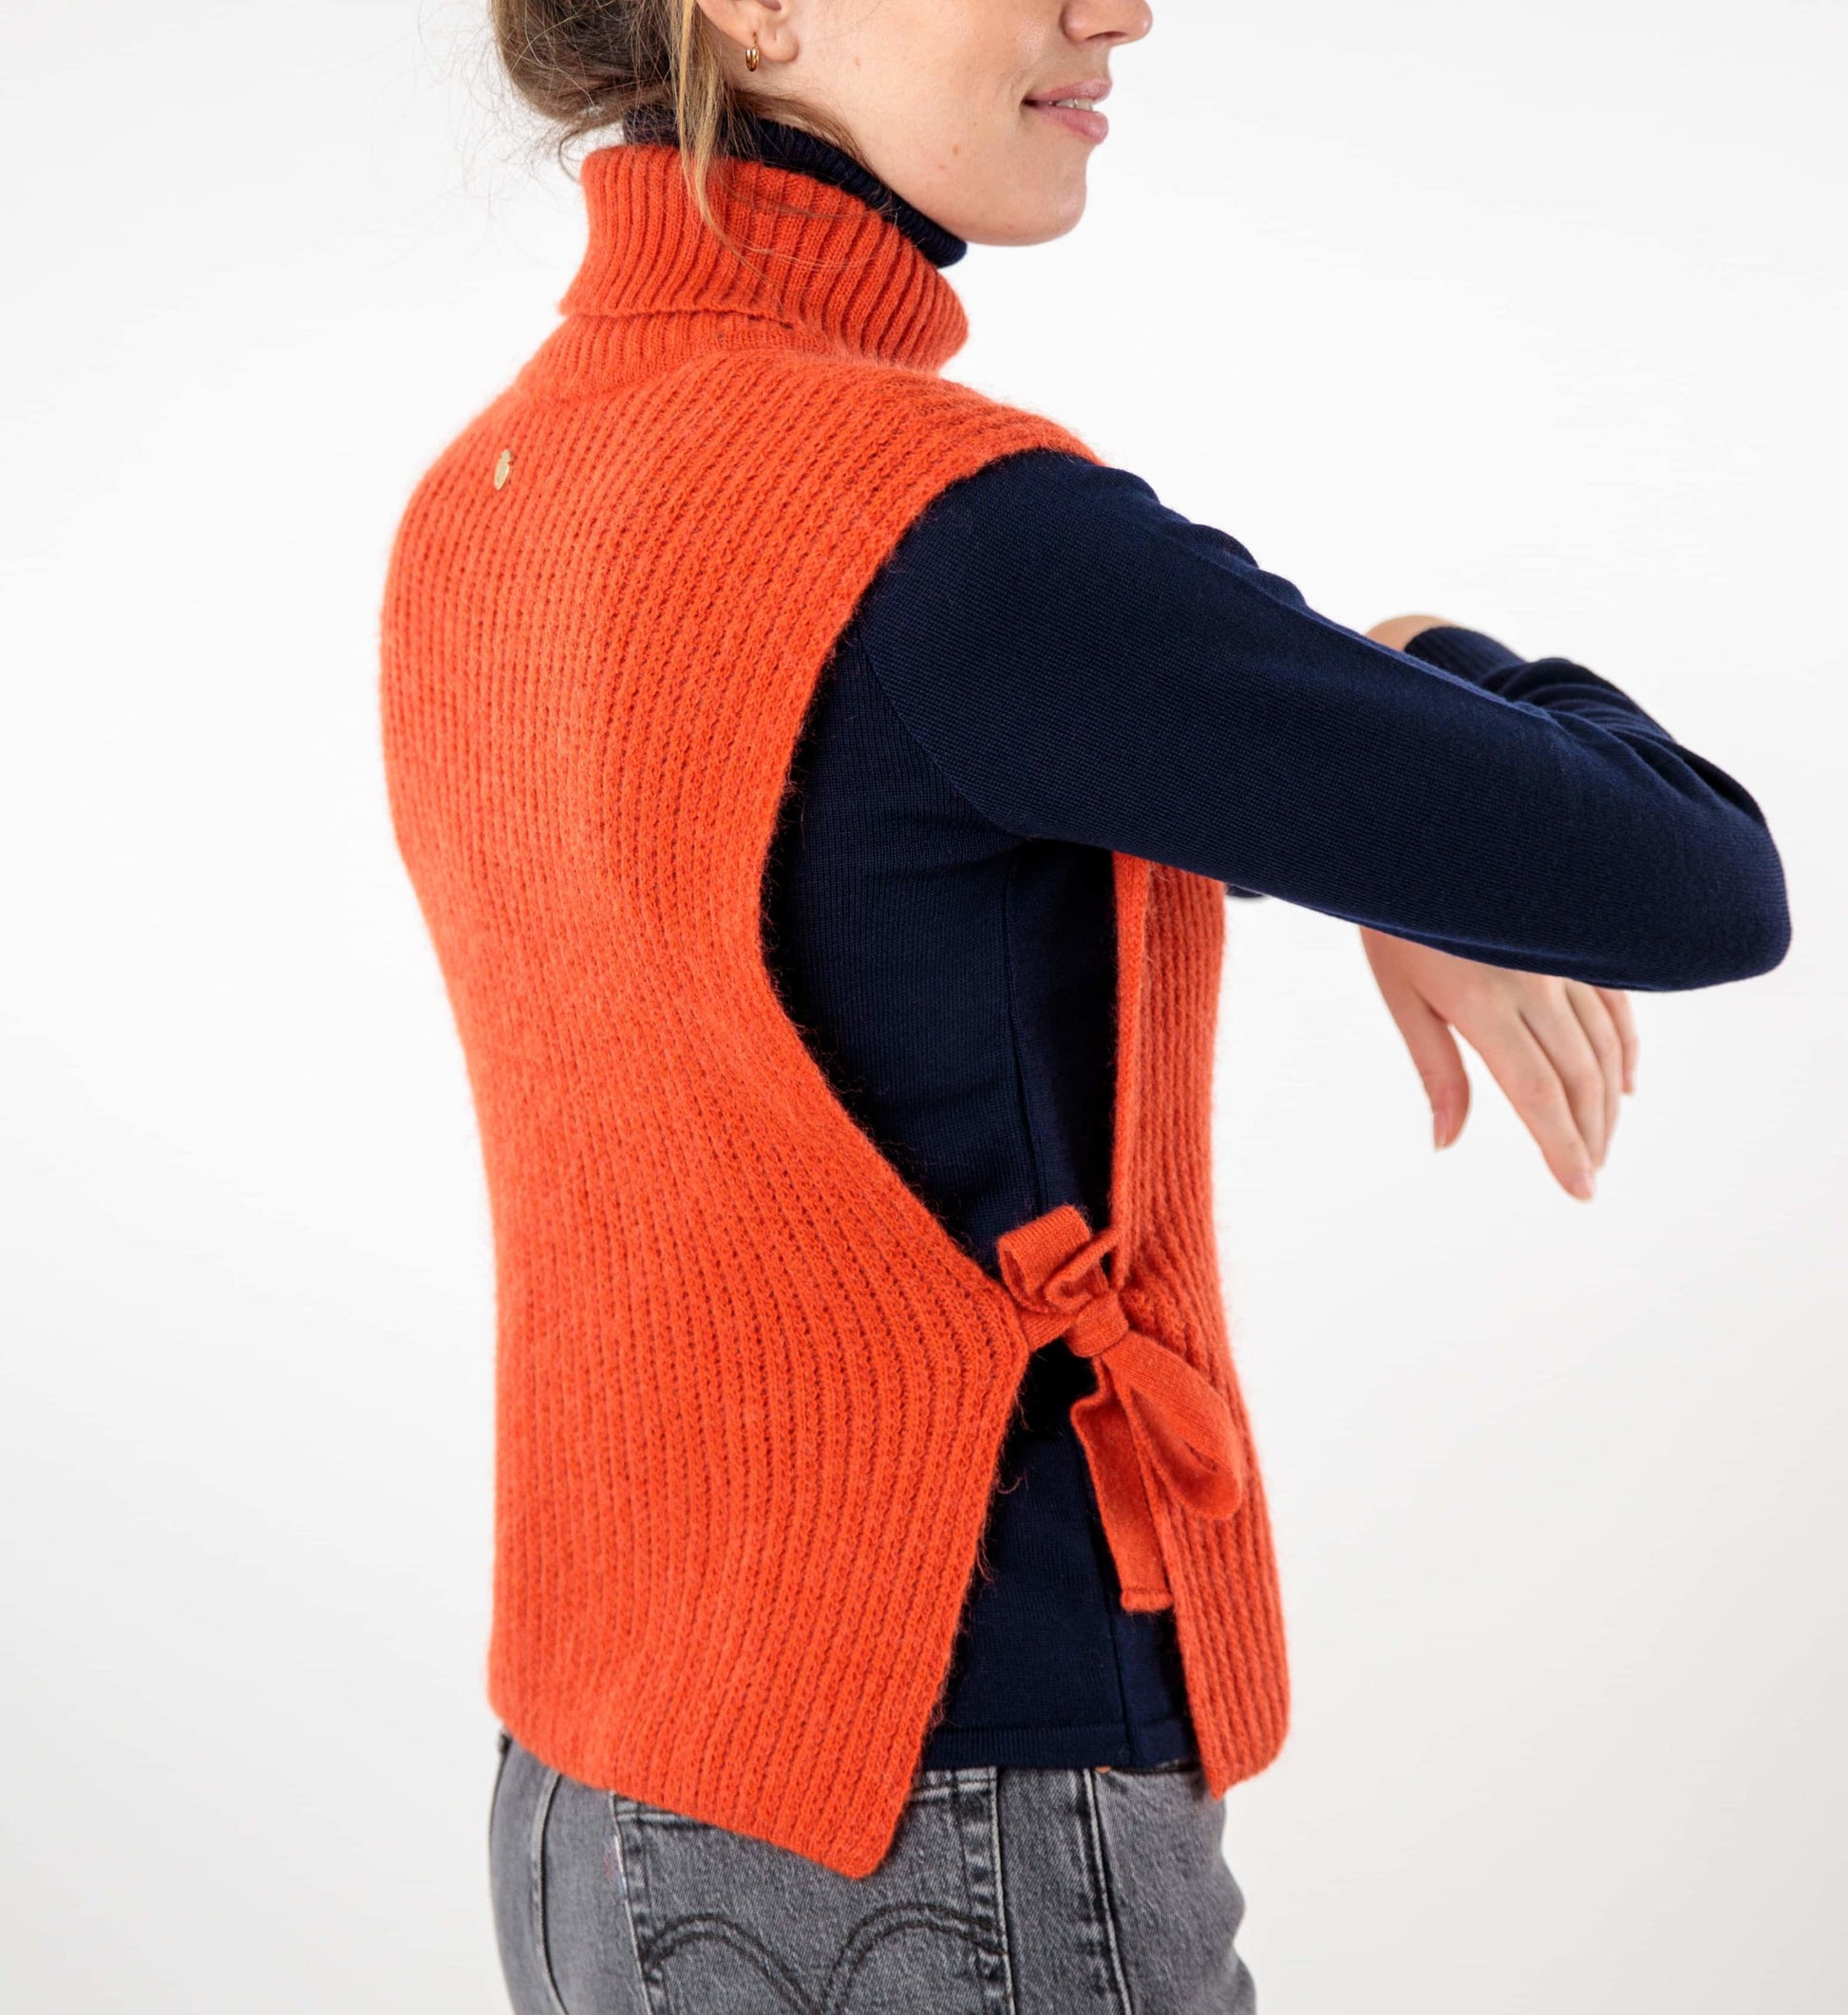 Sleeveless turtleneck sweater